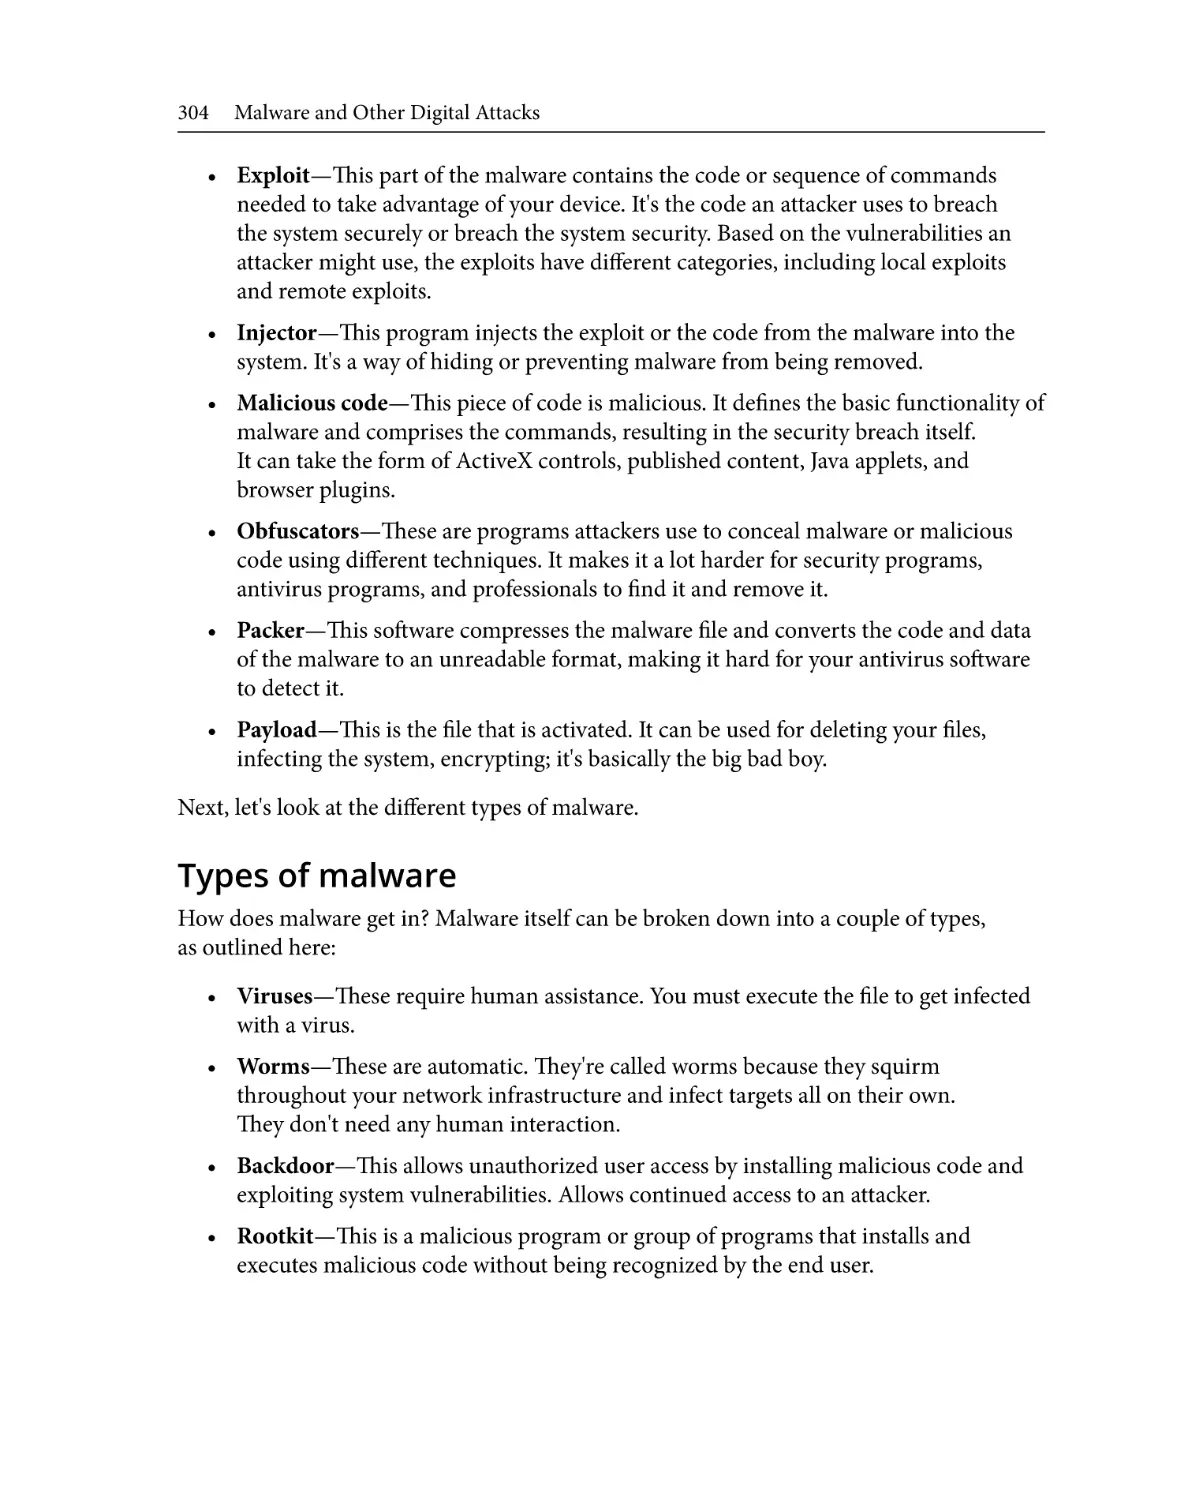 Types of malware